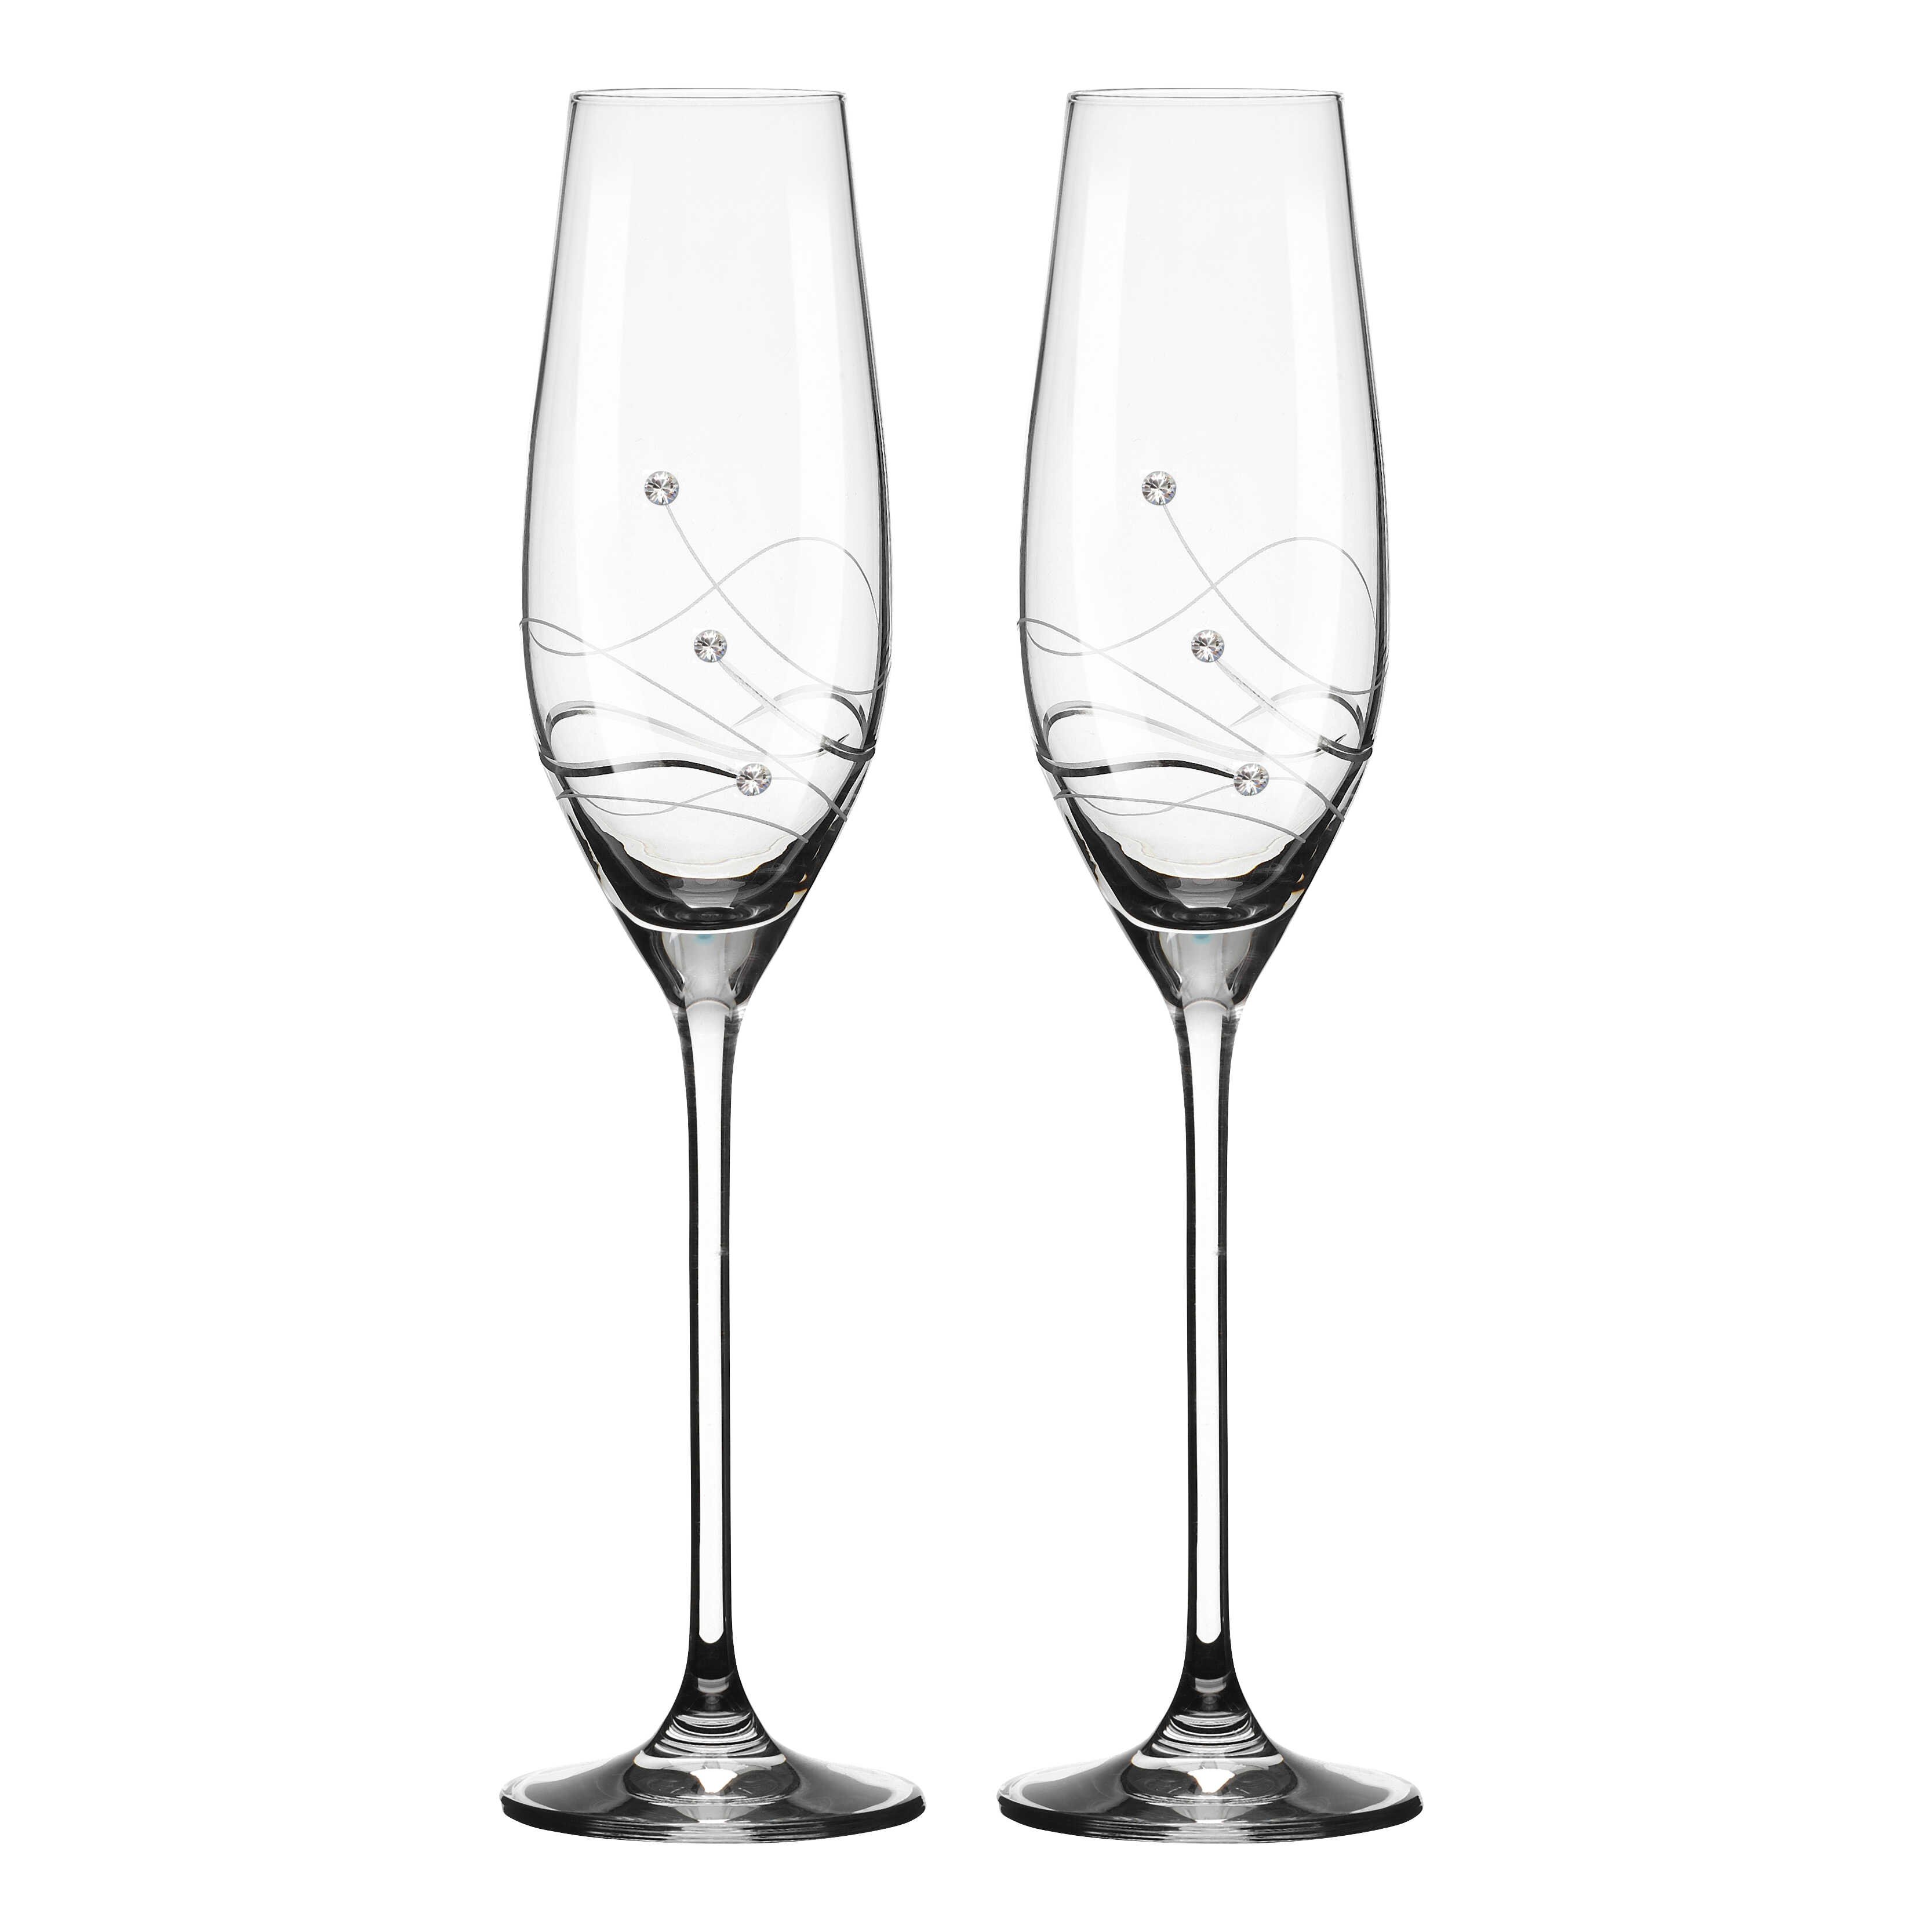 Clio Champagneglas med Swarovski krystaller - 2 stk.